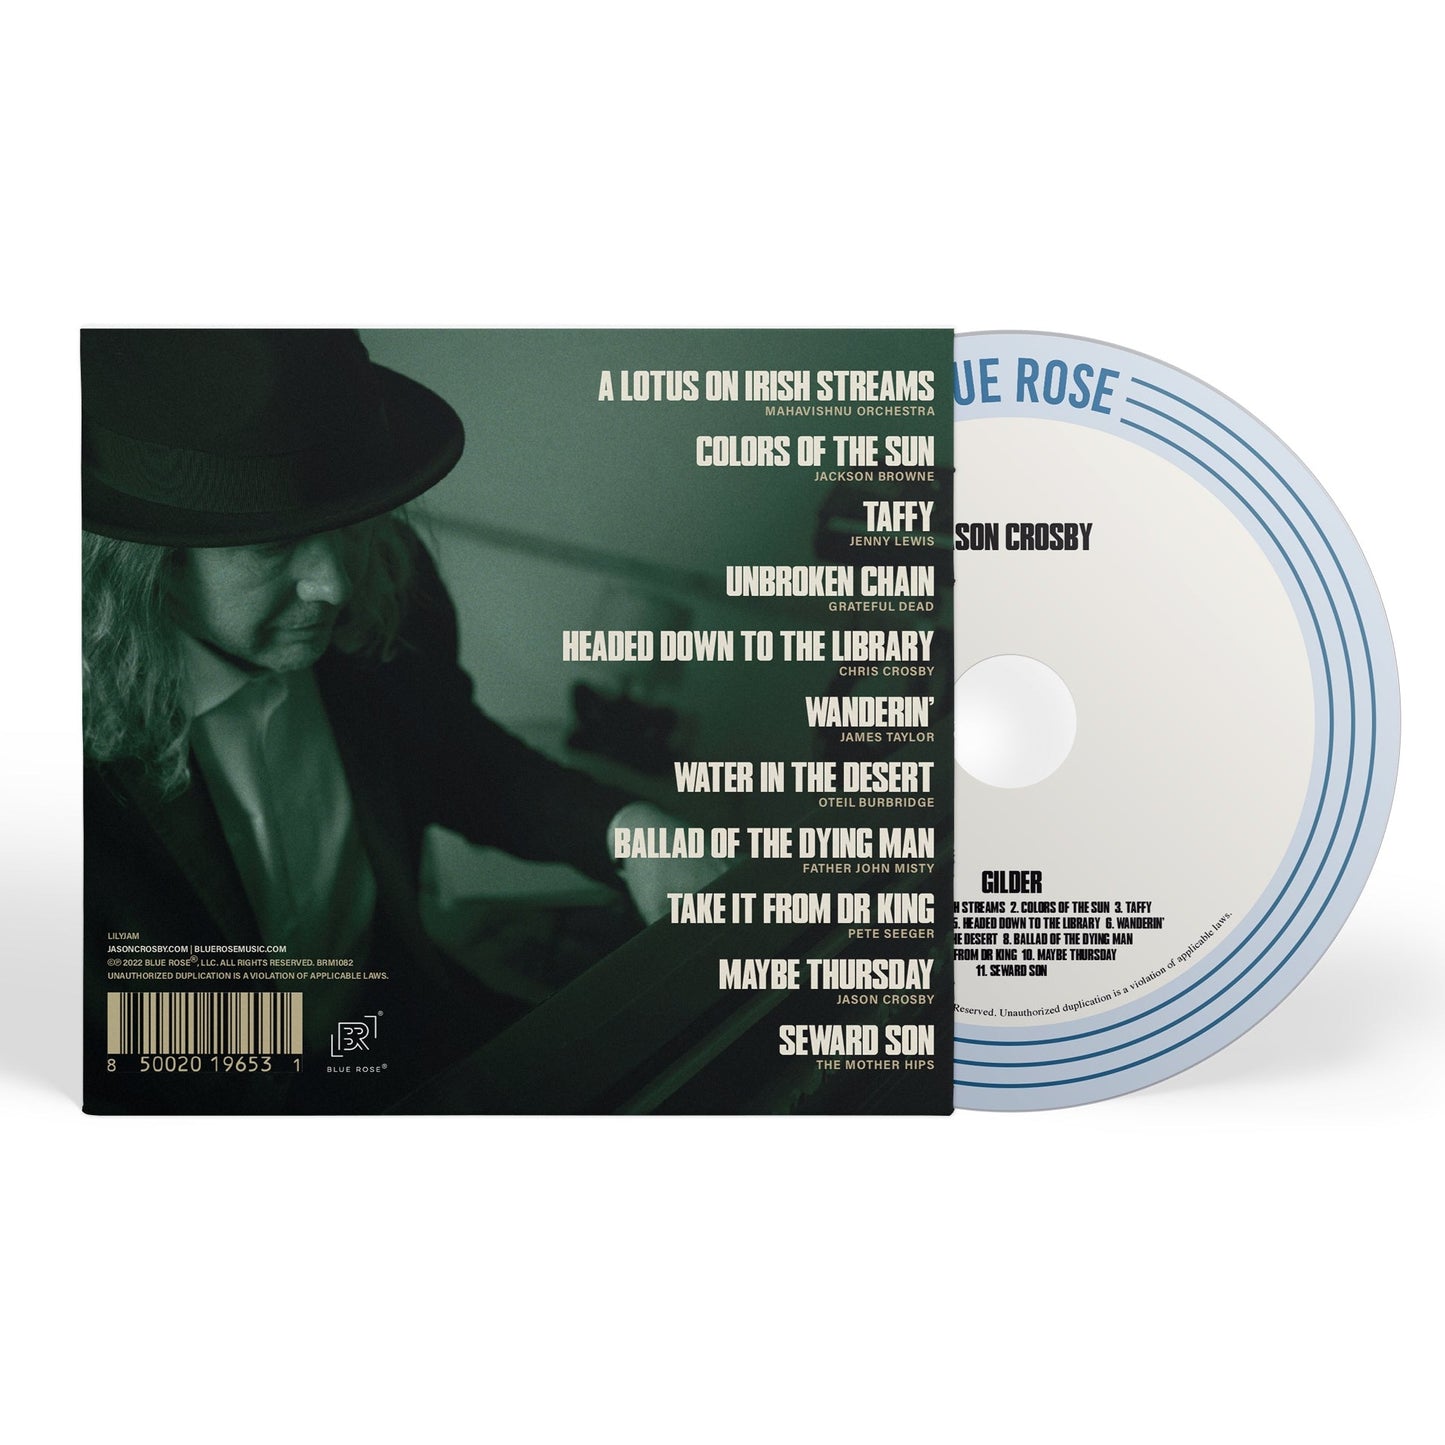 Jason Crosby "Gilder" CD